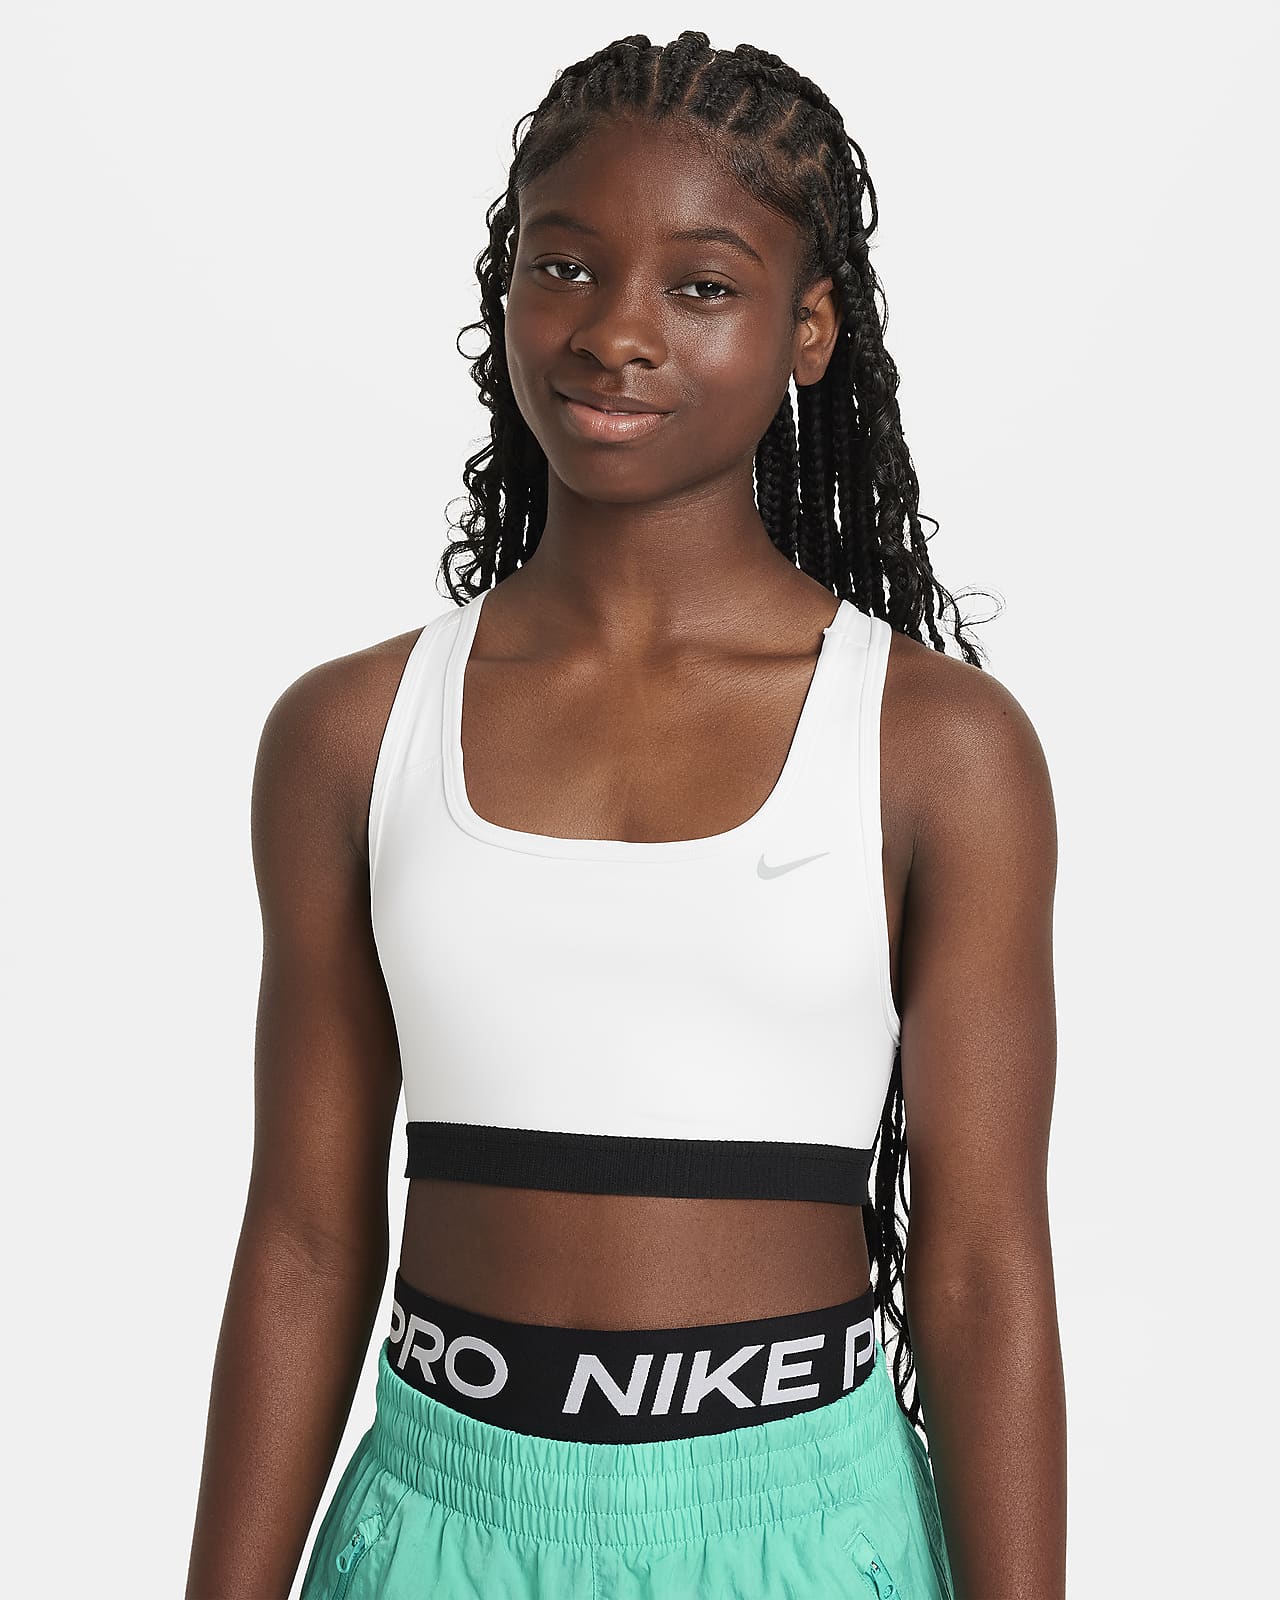 My Nike pro sports bra collection  Nike pro sports bra collection, Sports bra  collection, Nike pro sports bra